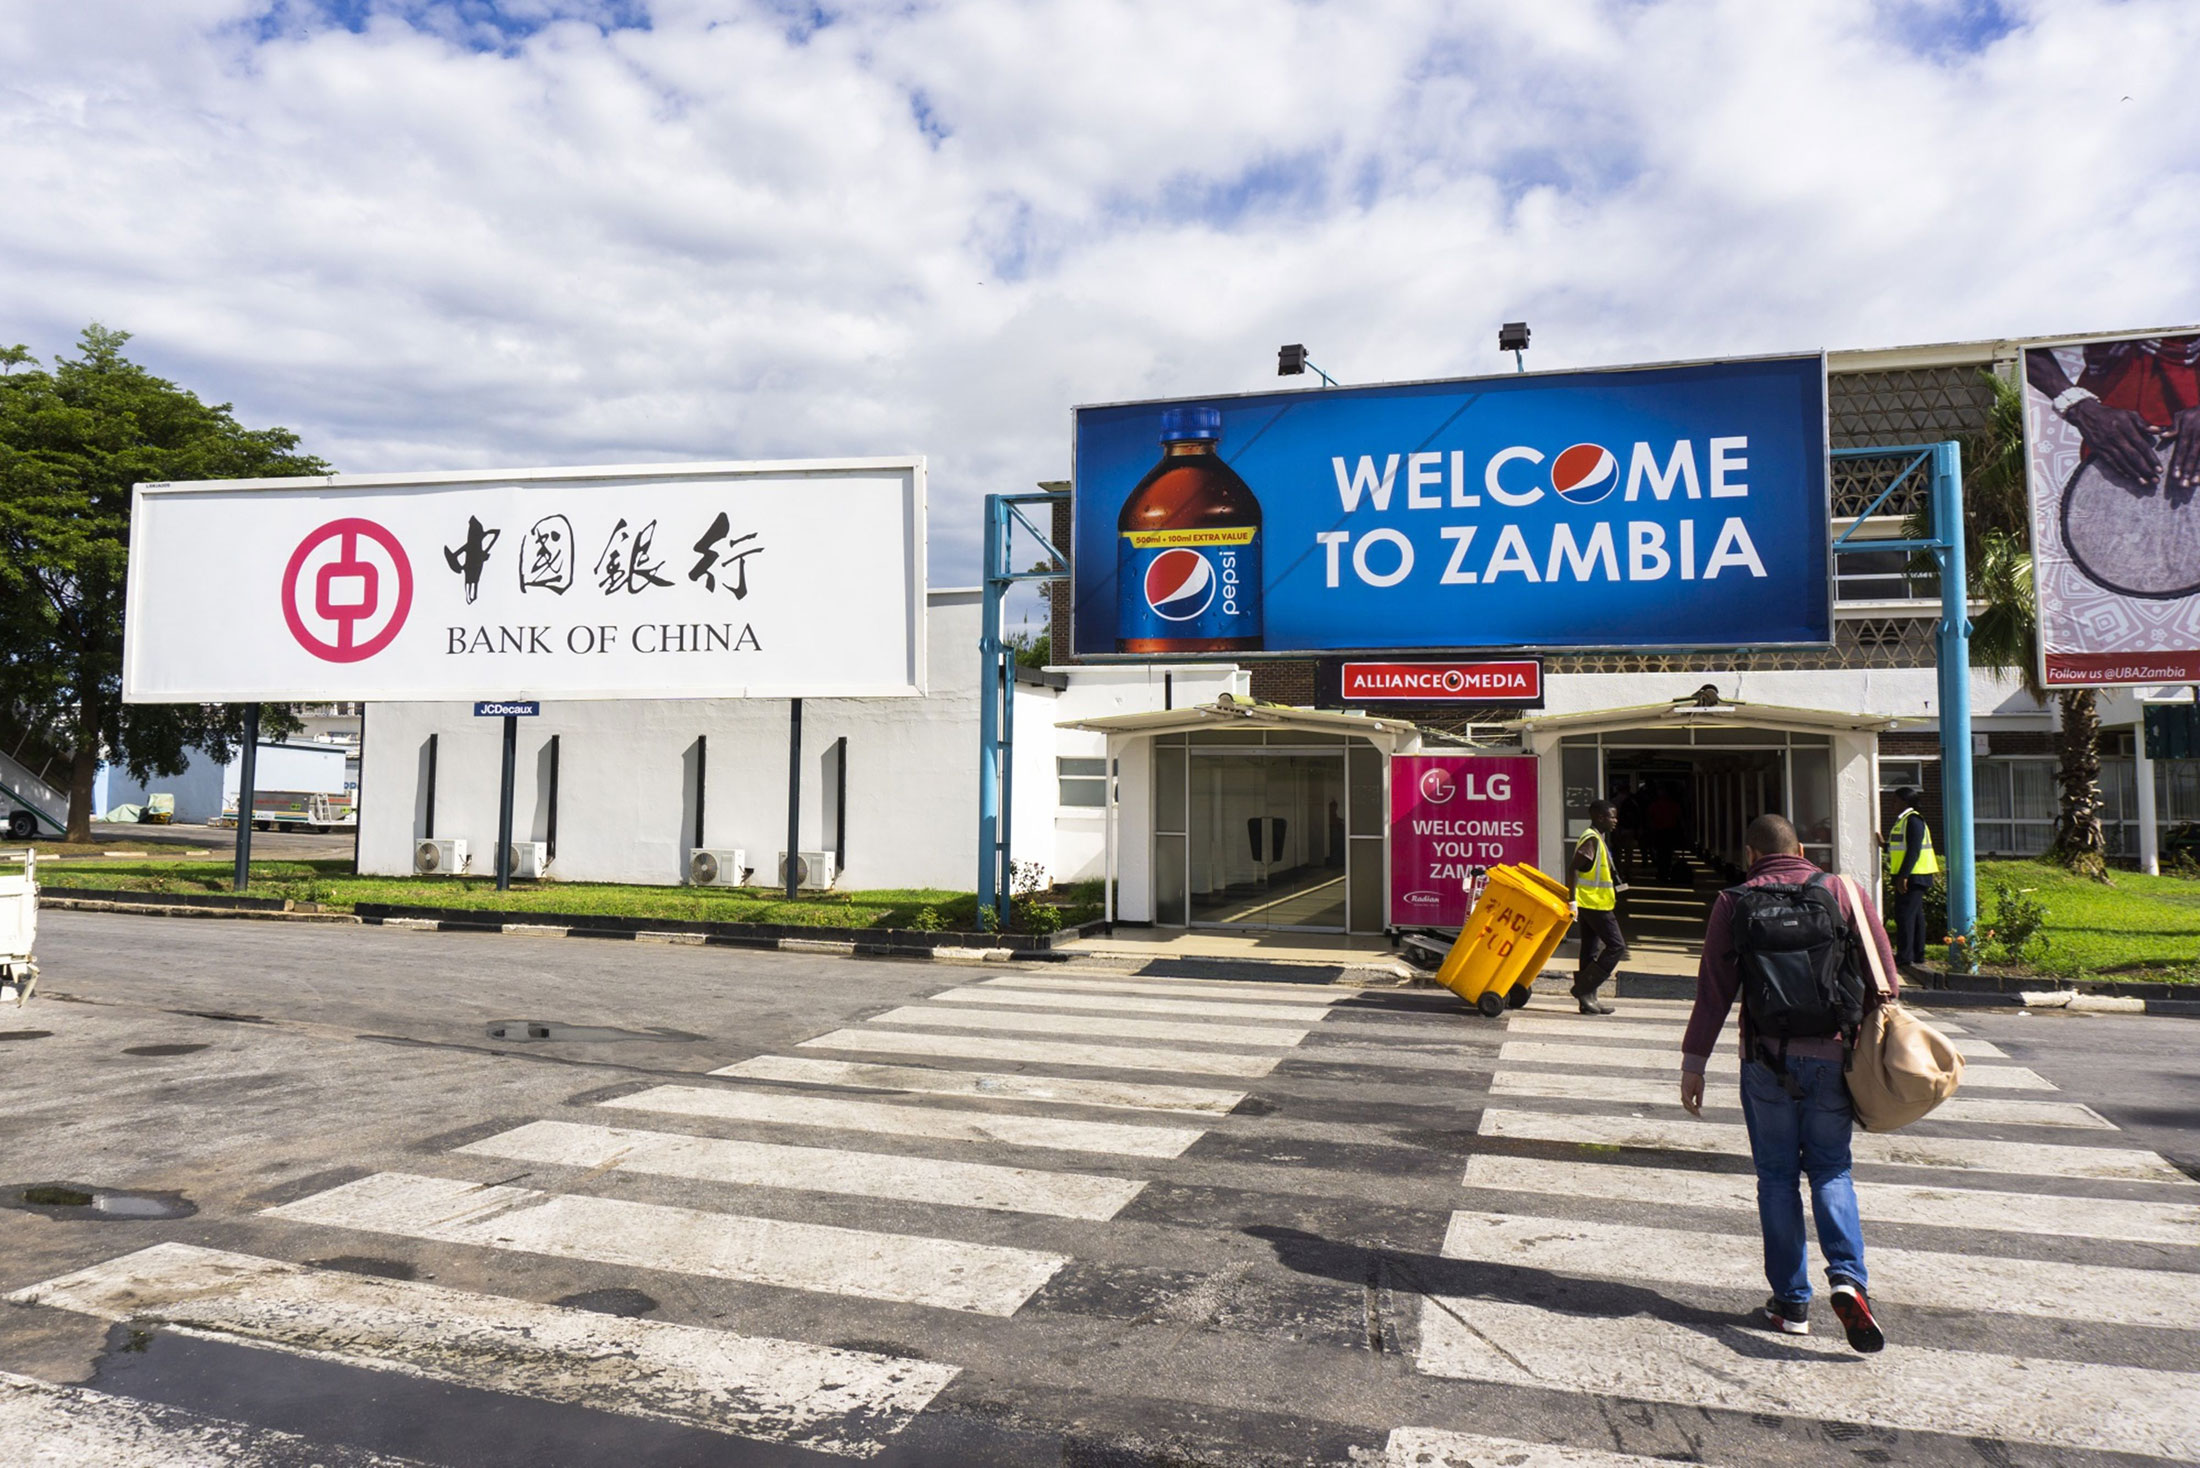 A&nbsp;Bank of China billboard at&nbsp;Kenneth Kaunda International Airport in Lusaka, Zambia.